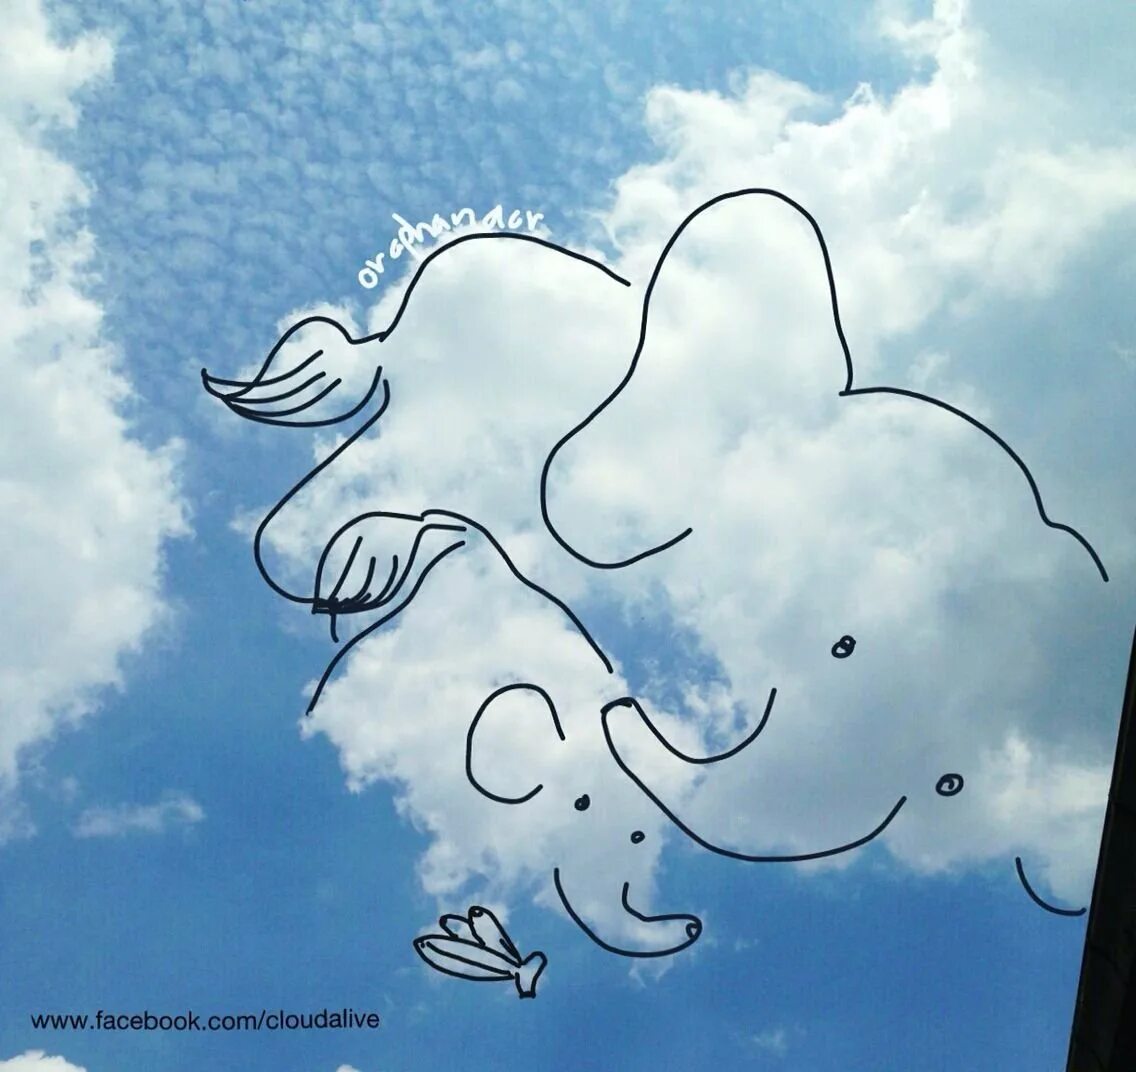 Облака рисунок. Облака нарисонваы. Красивые облака рисунок. Интересные облака.